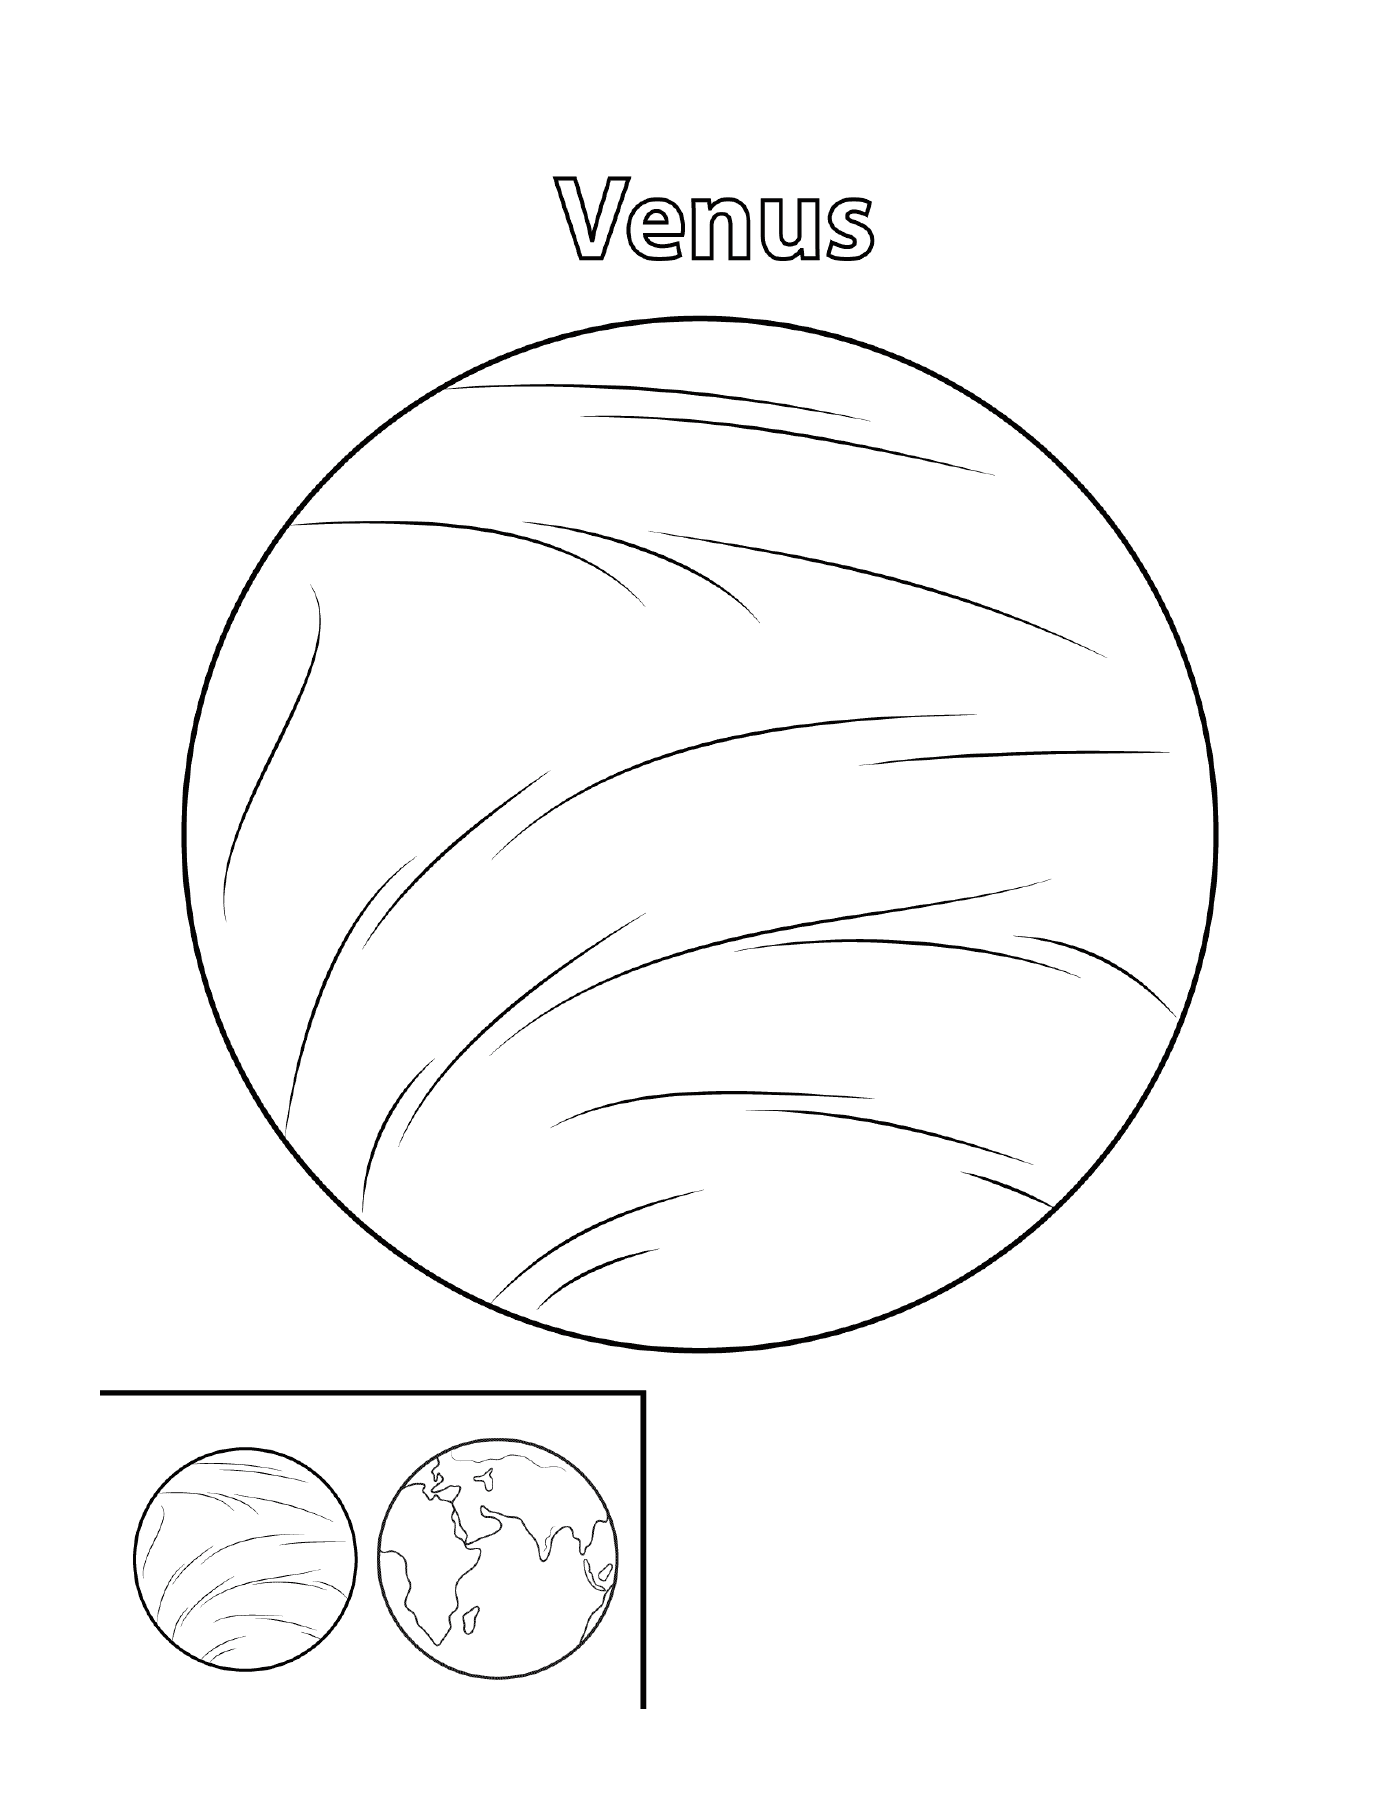  Planet Venus im Weltraum 